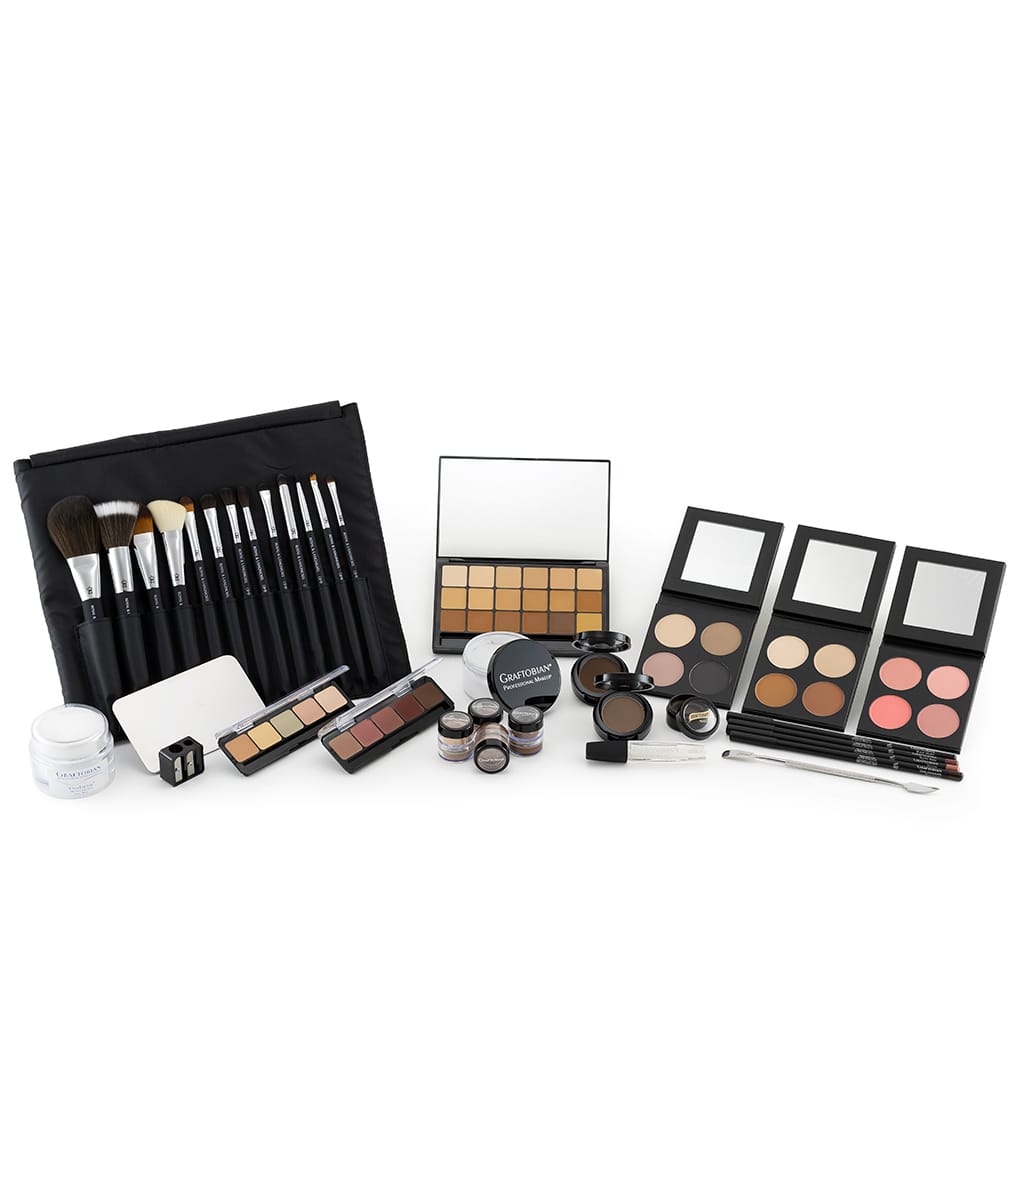 Proclass Ultra Hd Makeup Kit